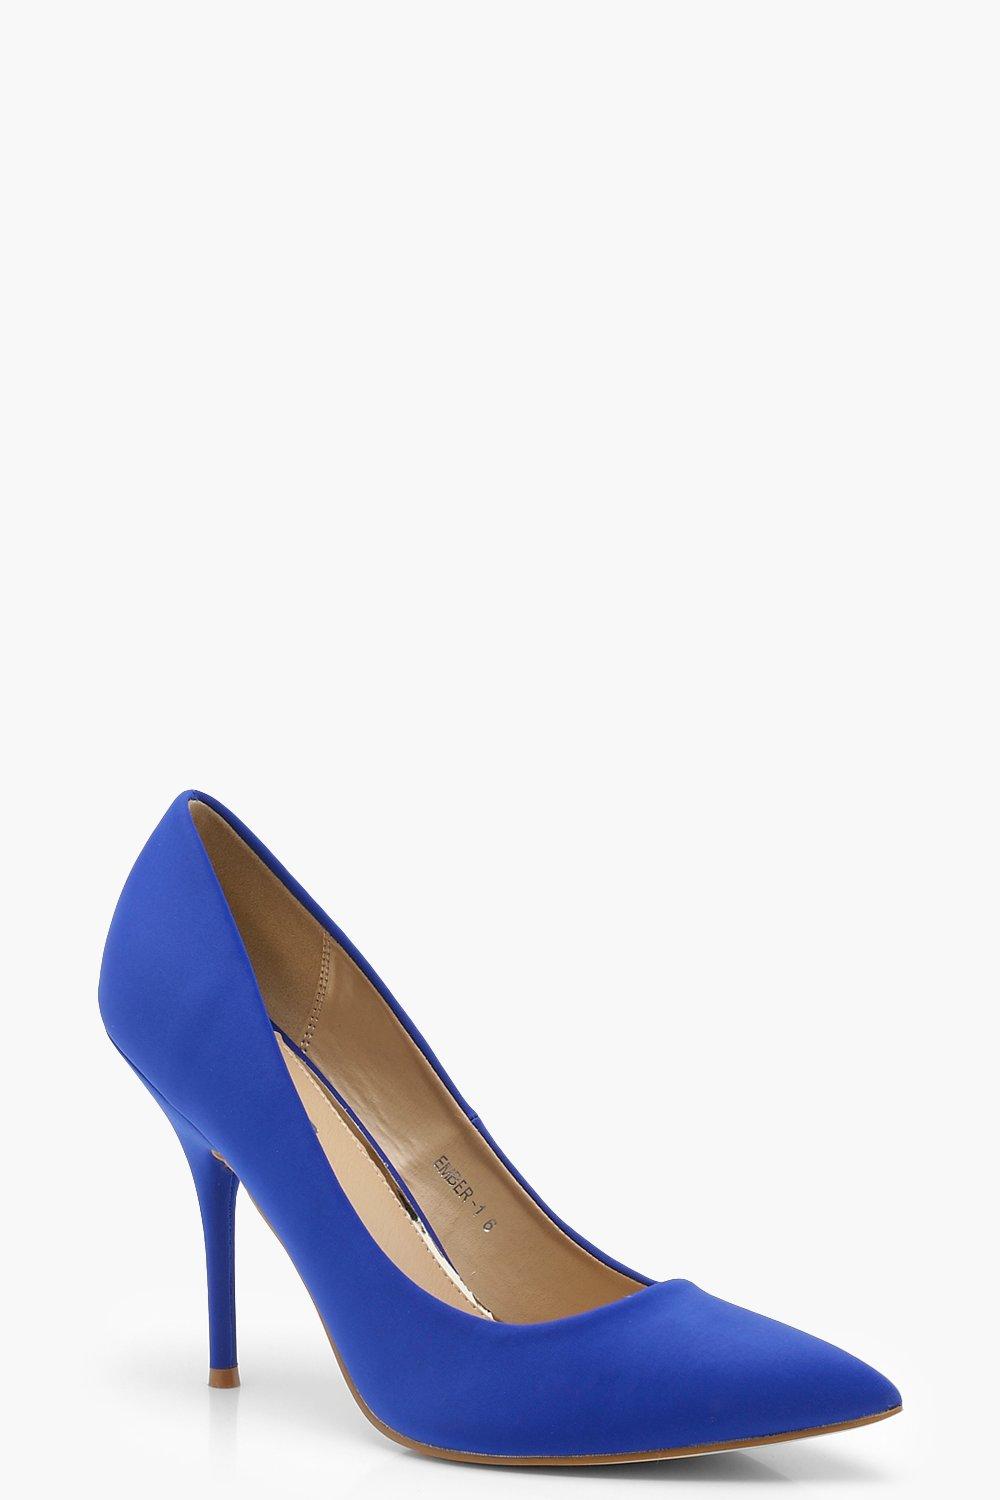 cobalt blue shoes ireland